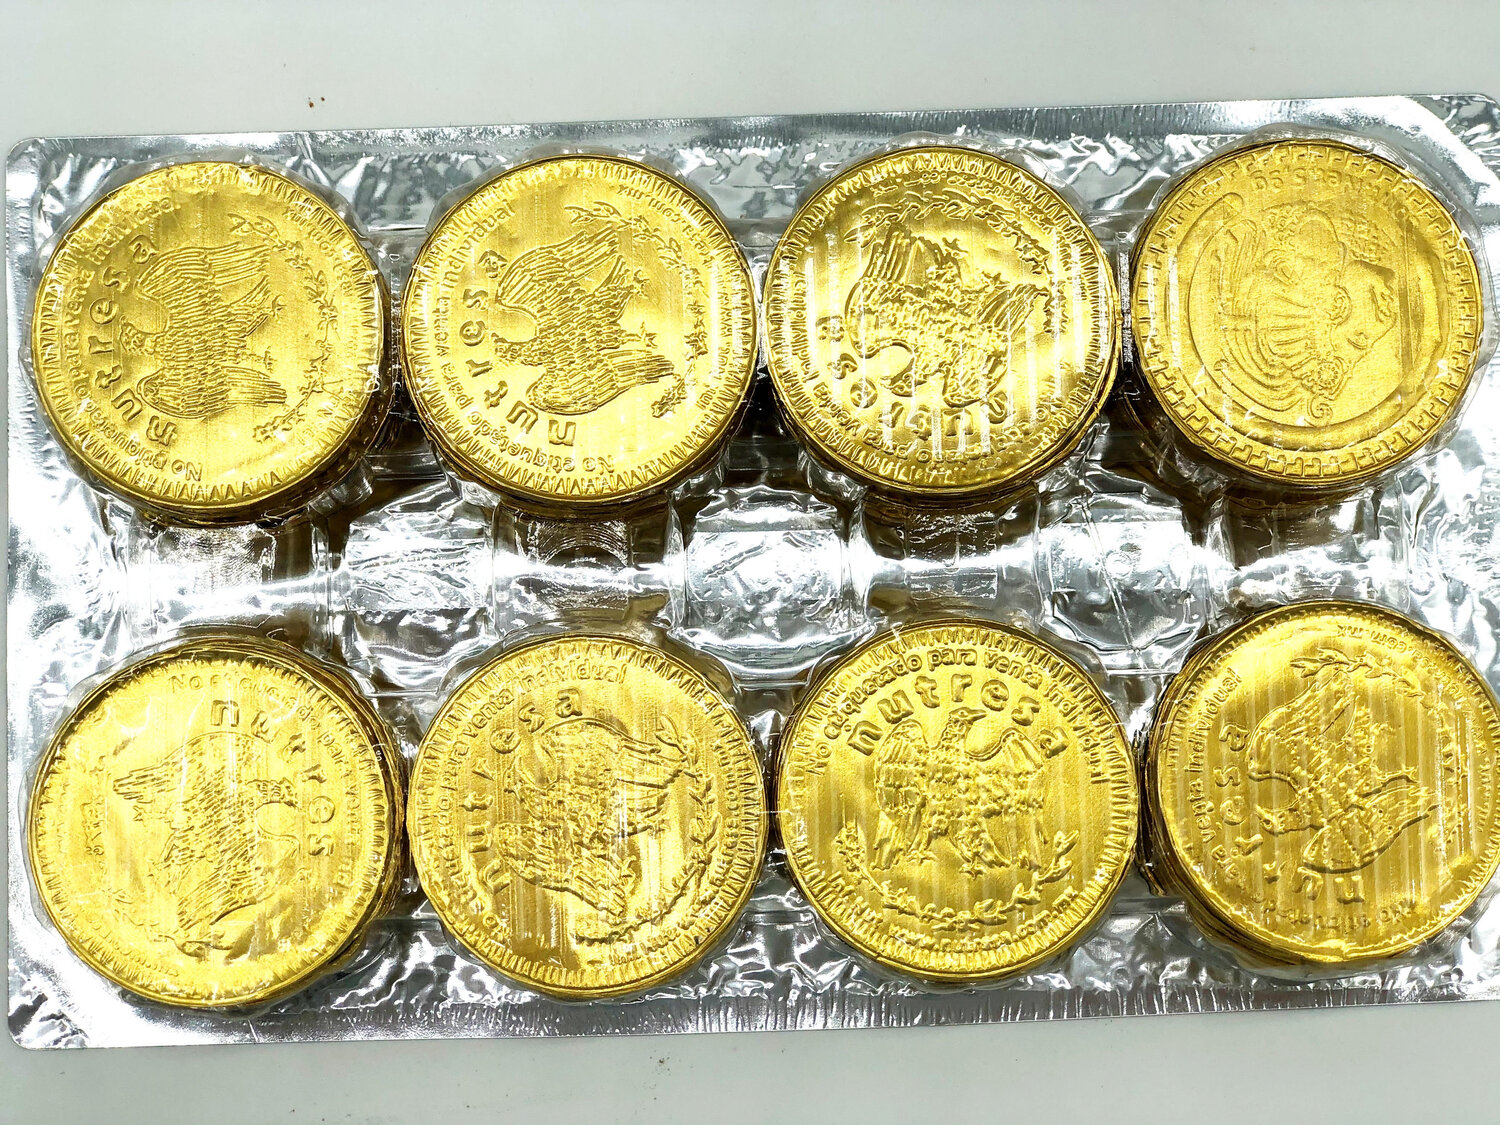 Nucita Monedas Chocolate Flavored Candy Coins 48 pieces per container —  Dulfi.Us